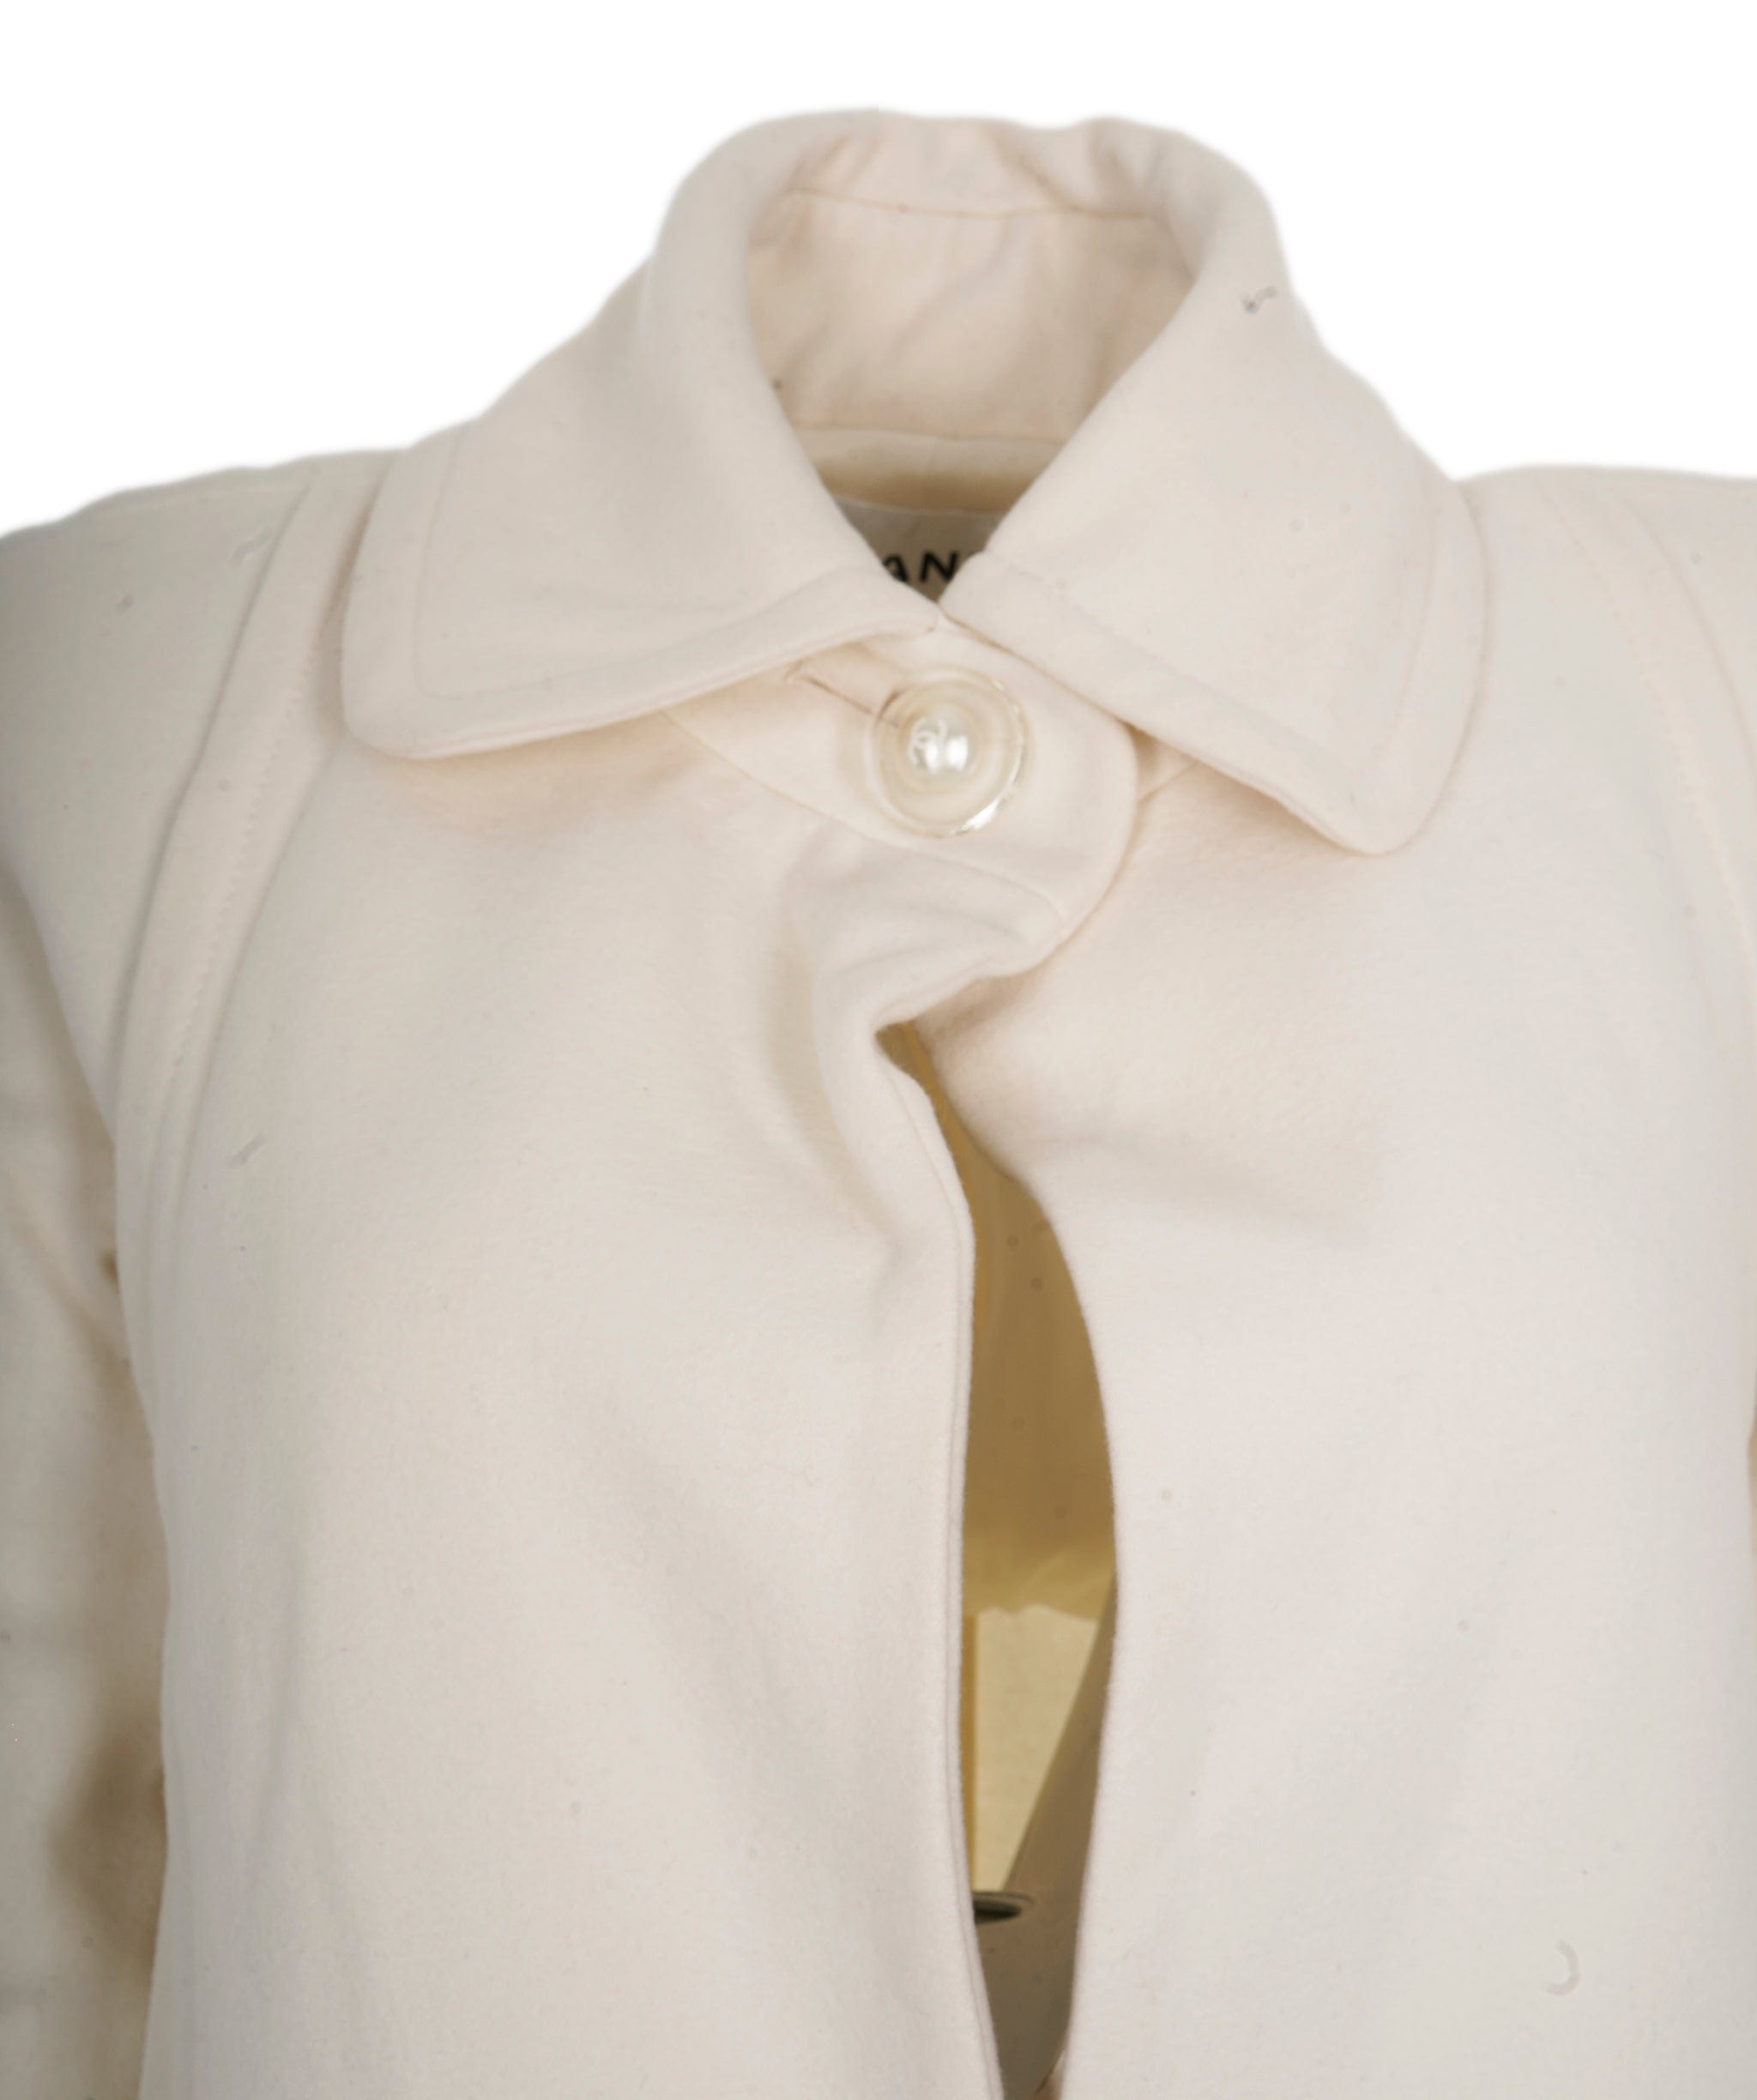 Chanel Chanel white pearl button long coat AVC1940